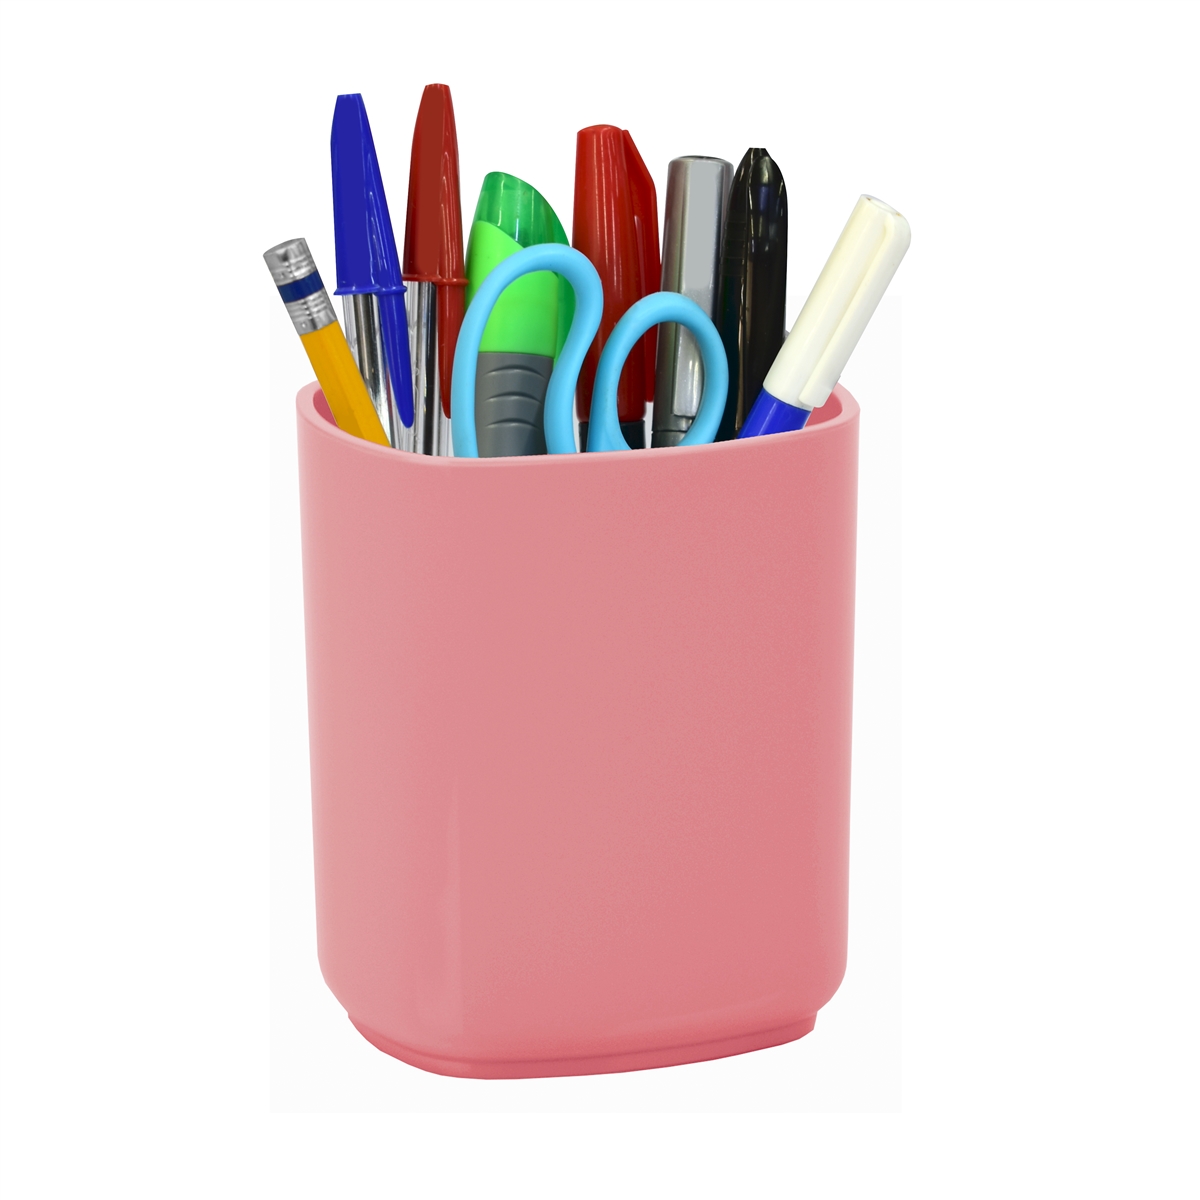 Acrimet Millennium Desk Organizer Pencil Paper Clip Cup Holder (With Paper)  (Solid Pink Color) Code 740.9